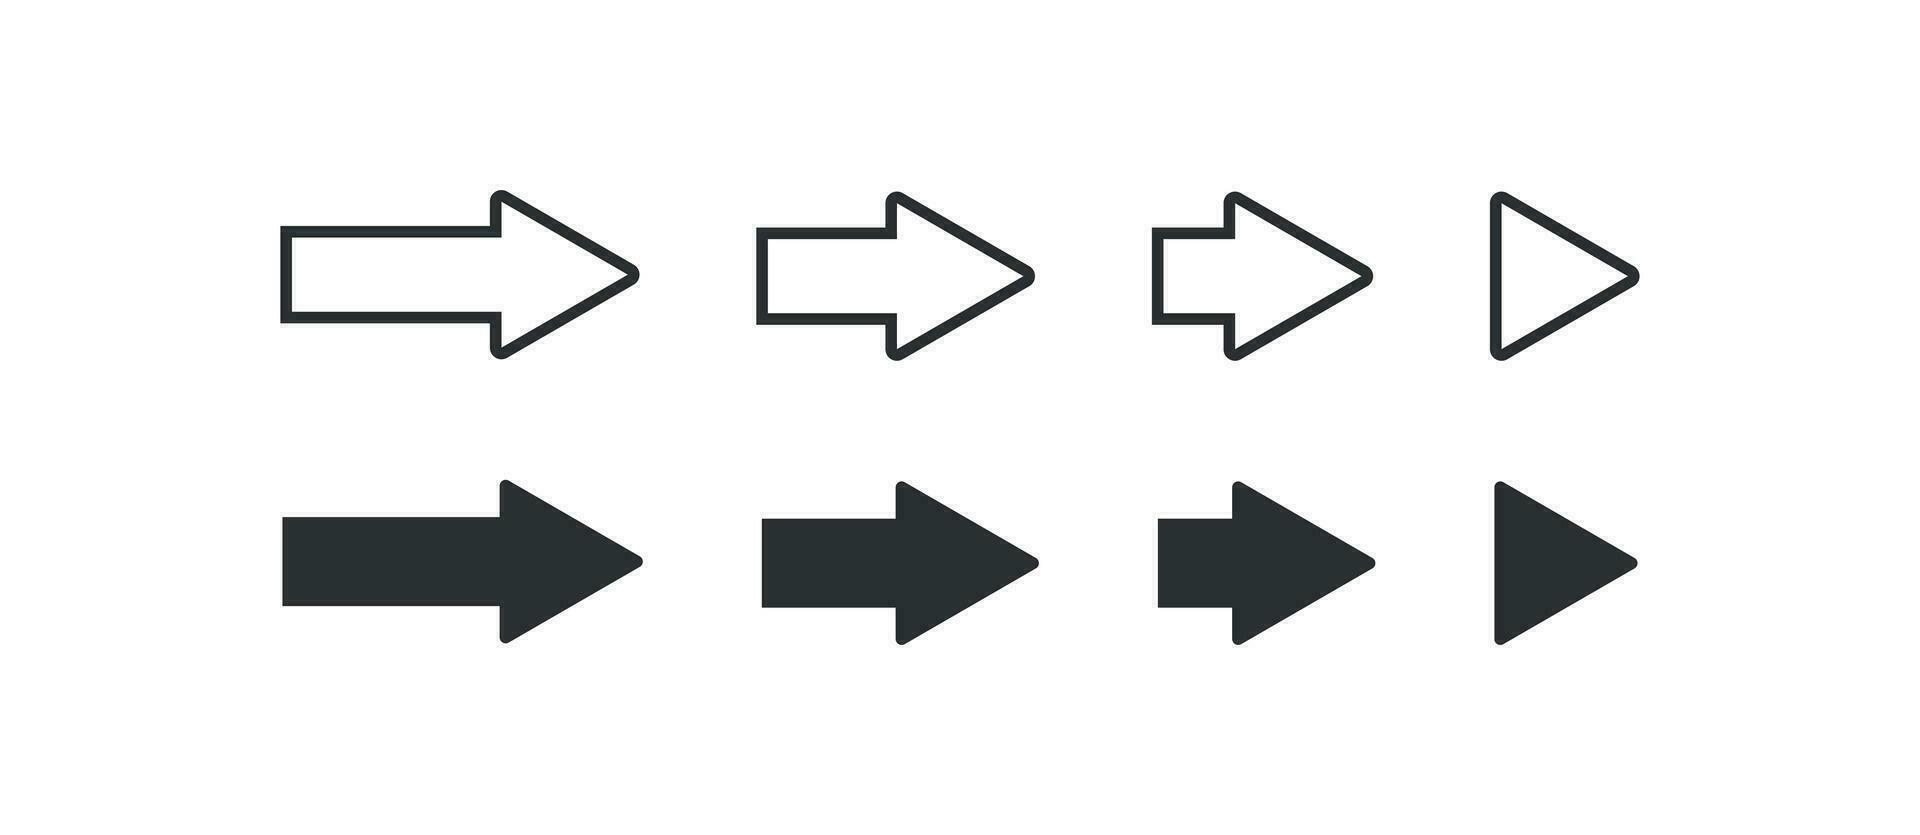 Arrow right icon set. Pointers vector